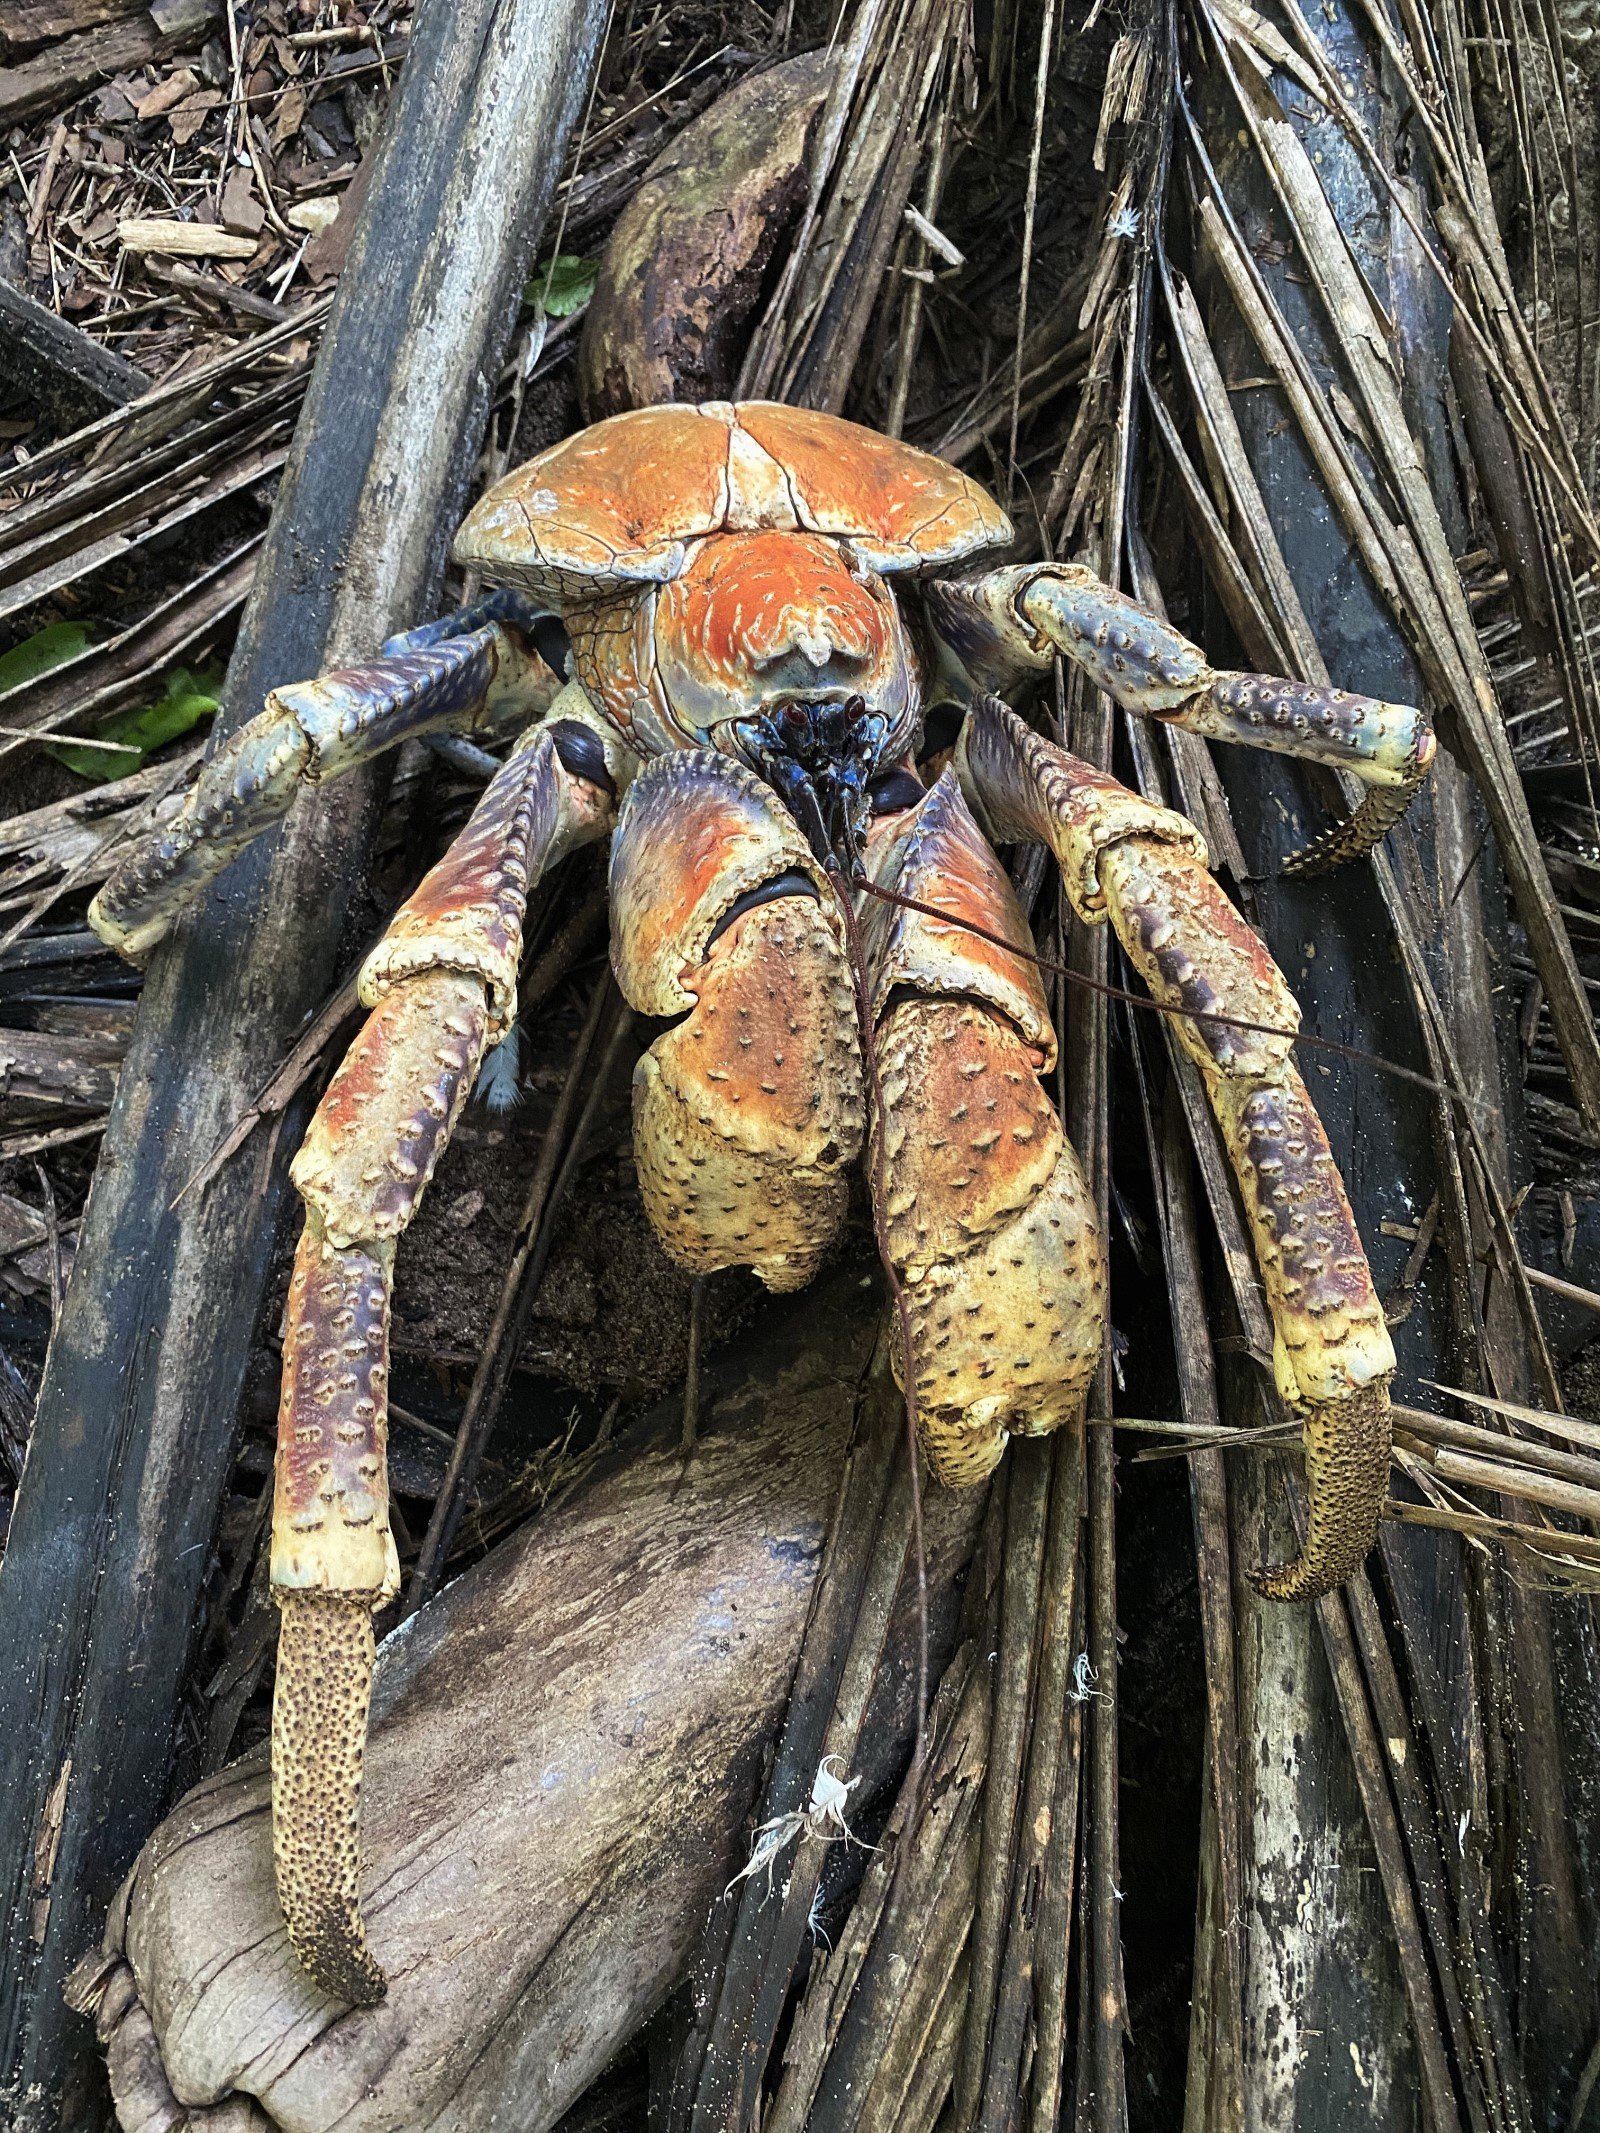 Robber crab on plant debris